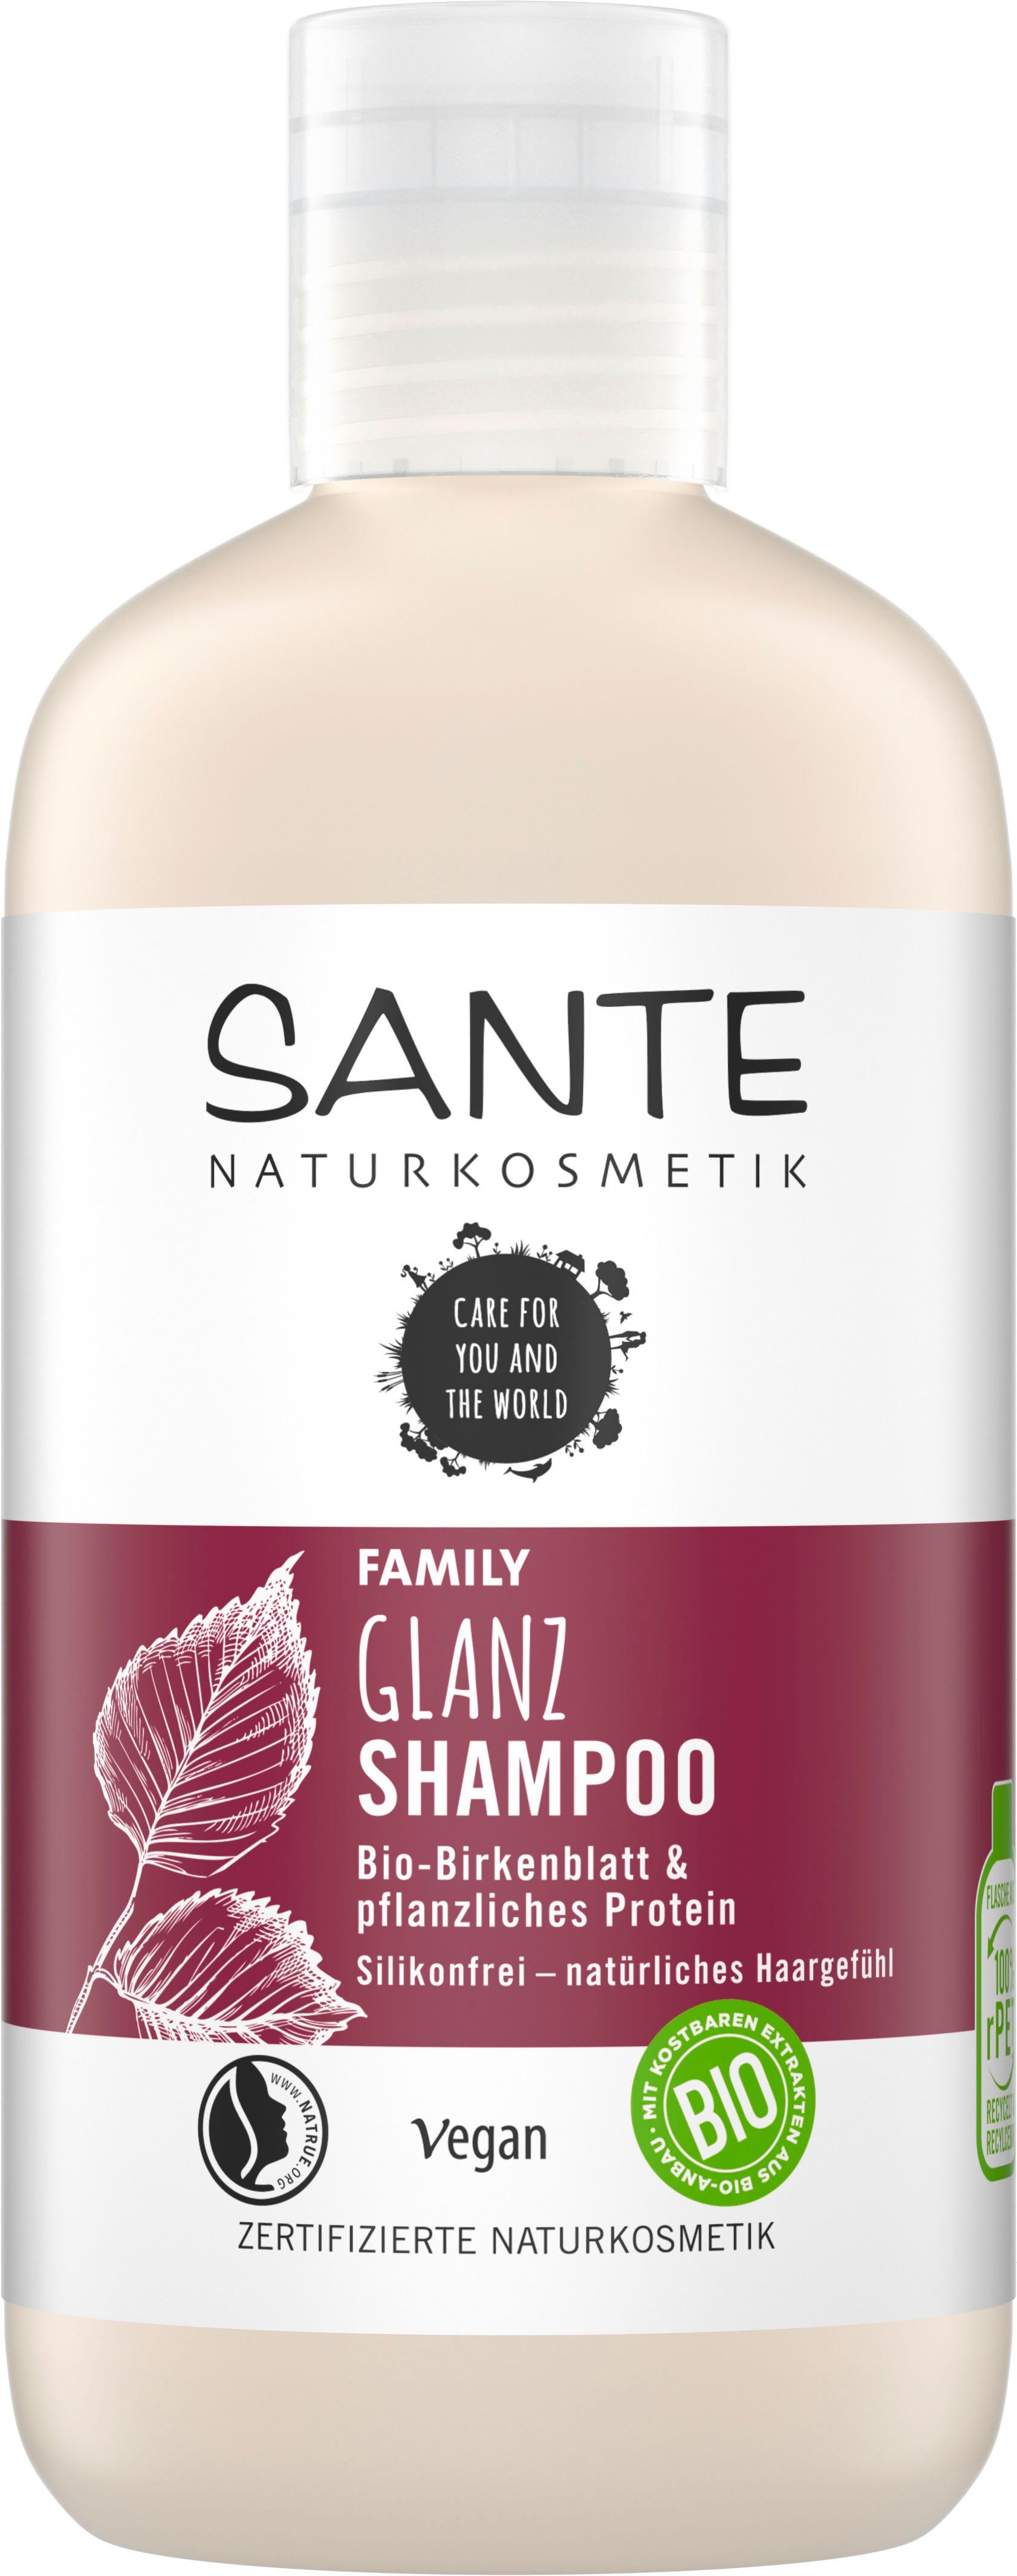 Beliebtes TOP FAMILY Haarshampoo SANTE Glanz Shampoo